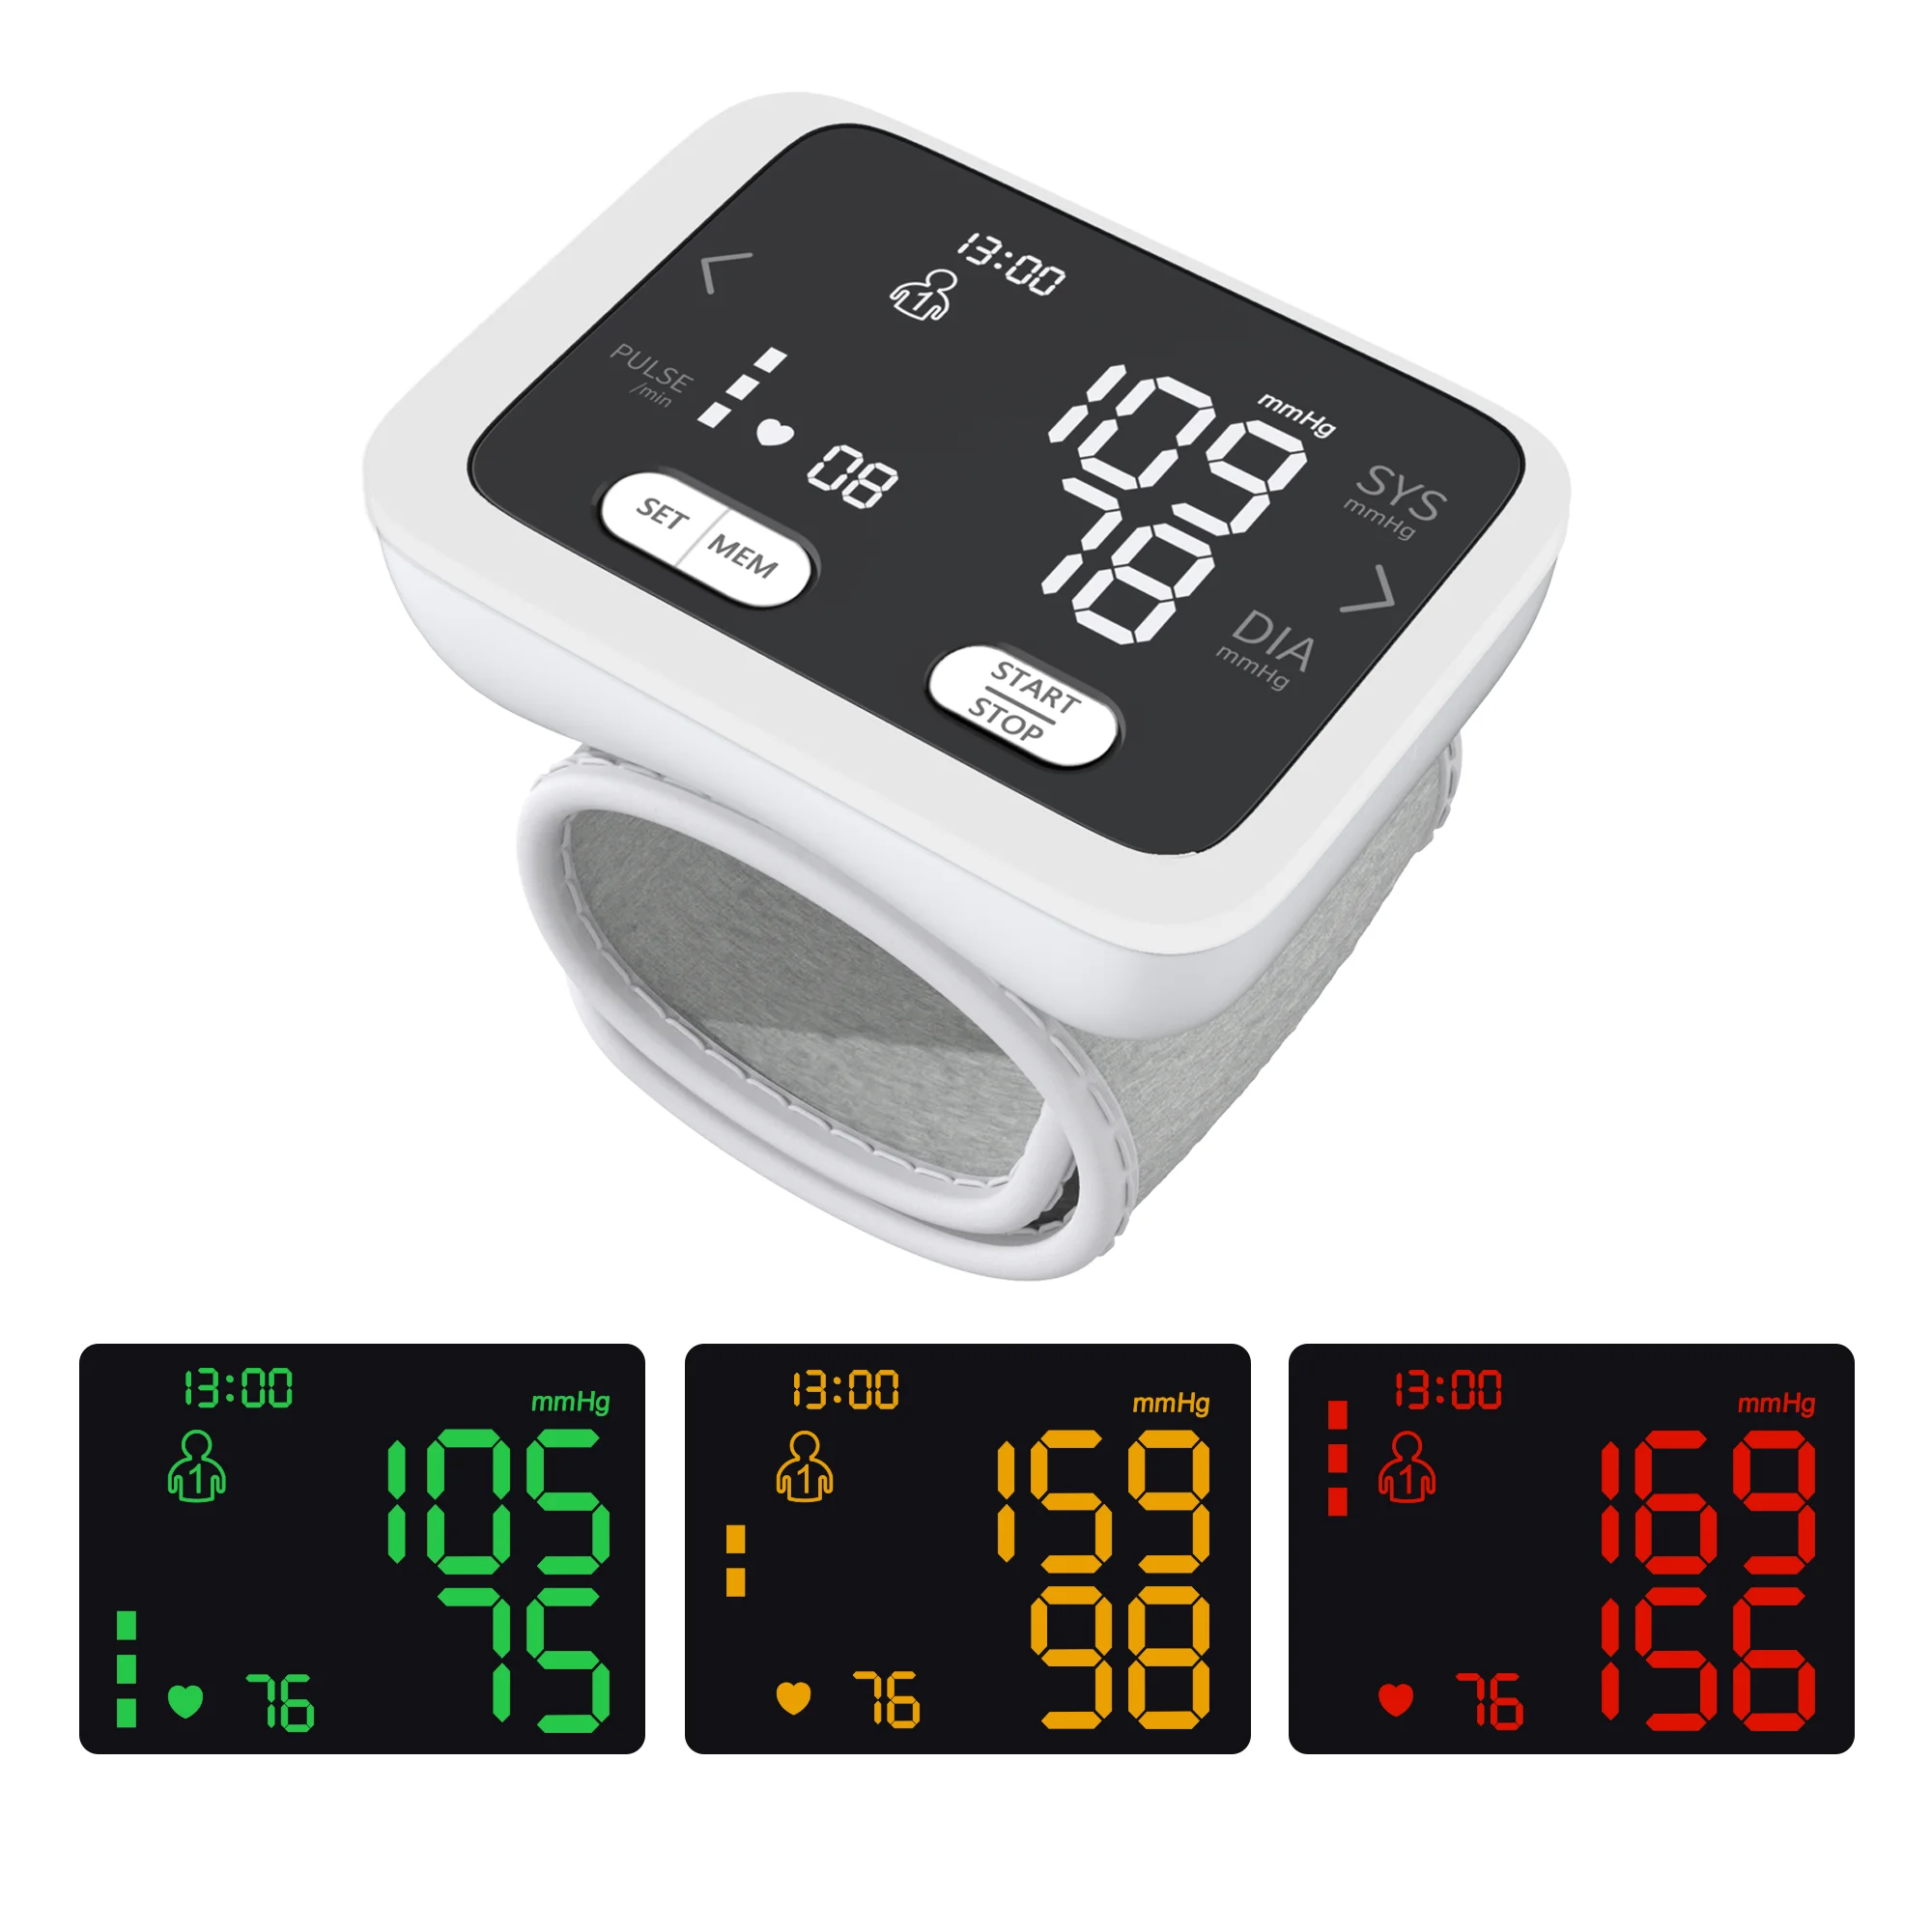 
wrist bp monitor blood pressure 